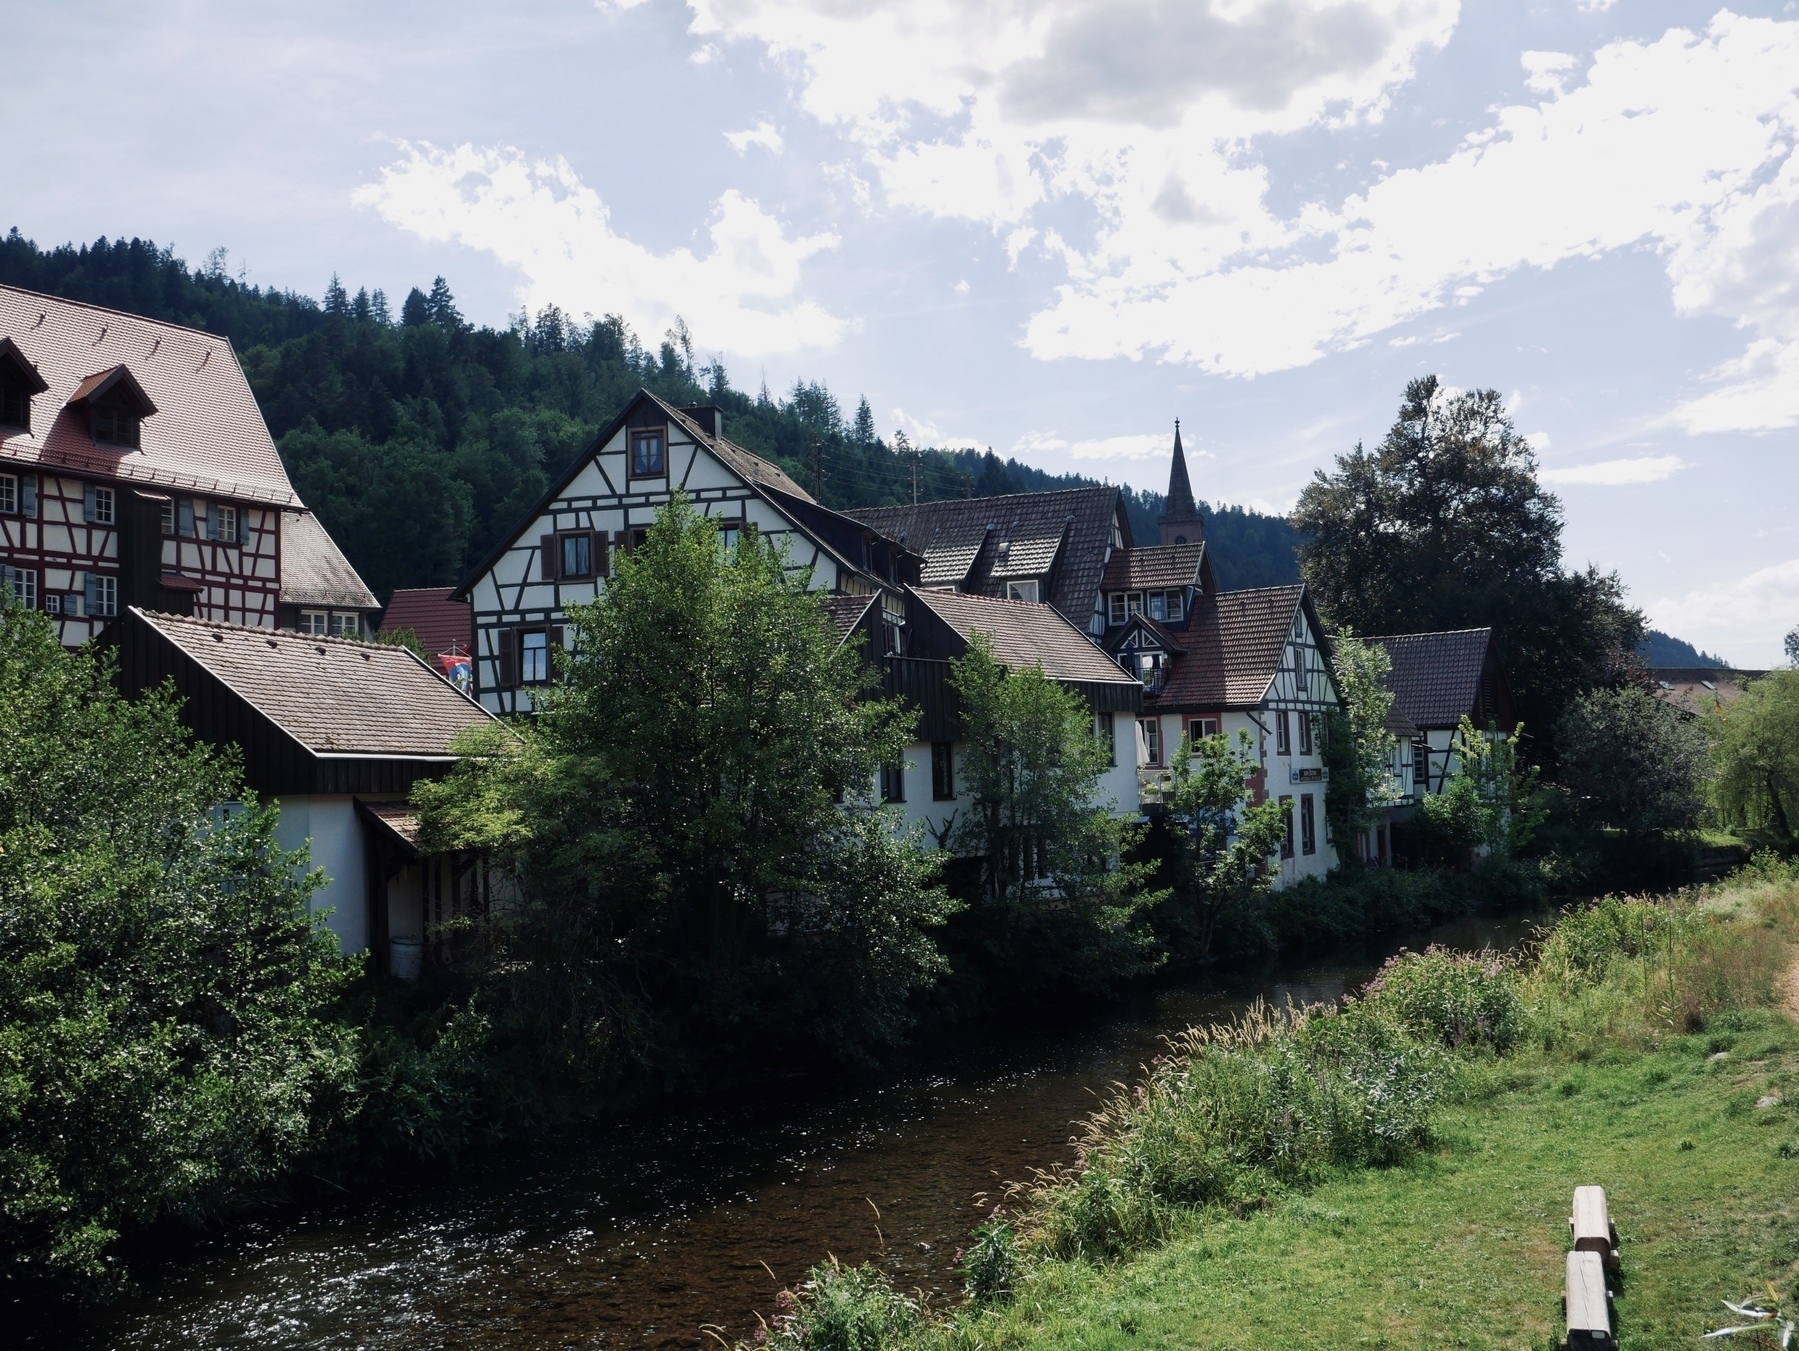 Houses in Schiltach